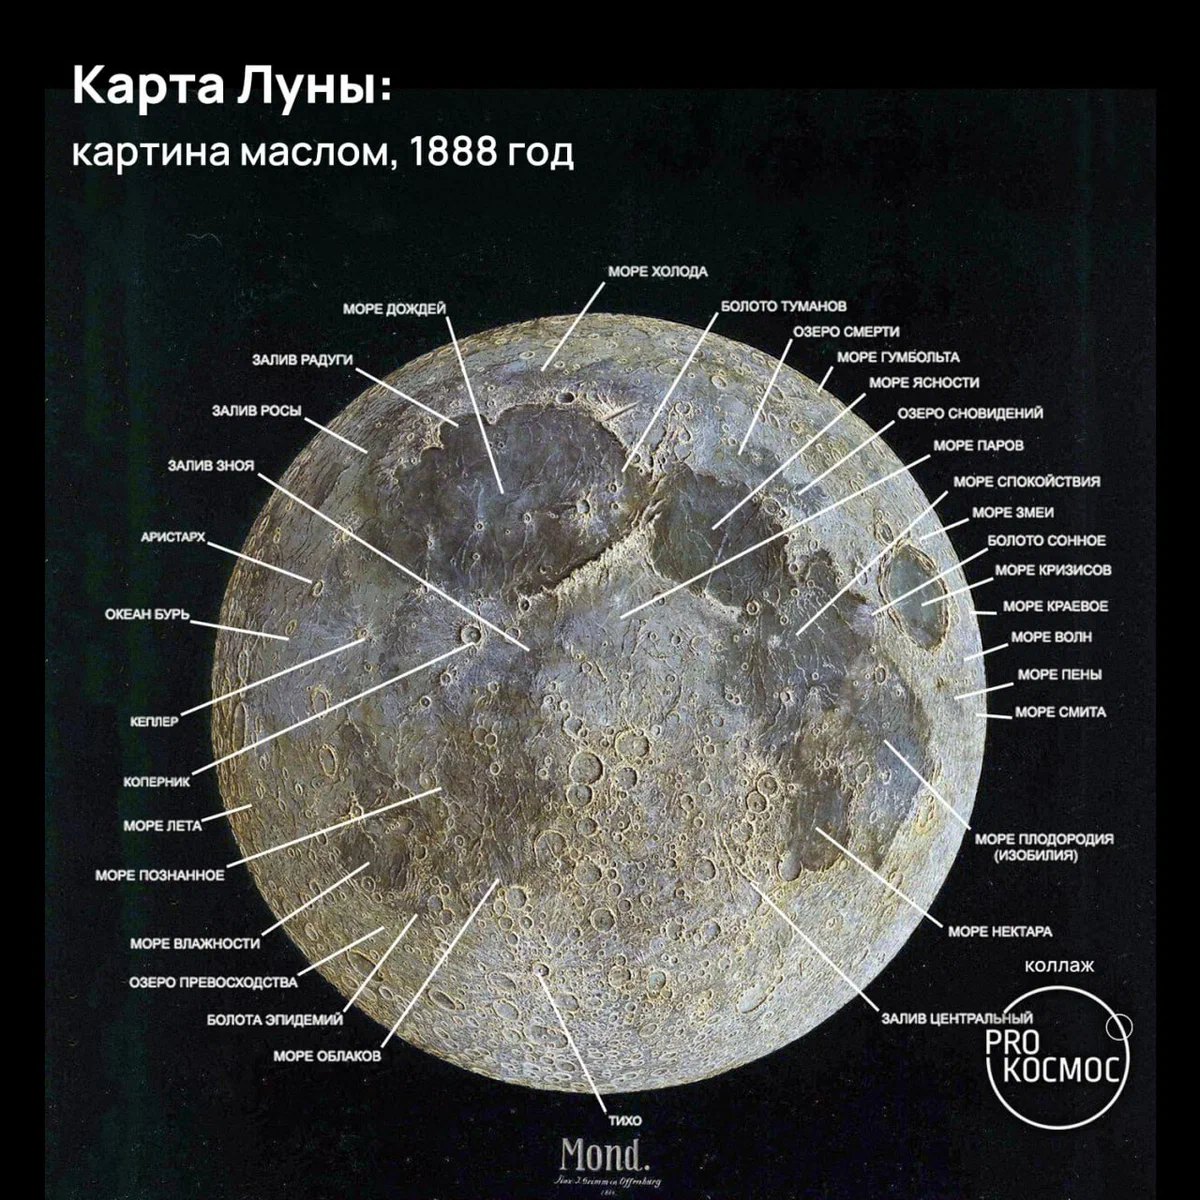 Карта Луны: картина маслом, 1888 год height=1200px width=1200px